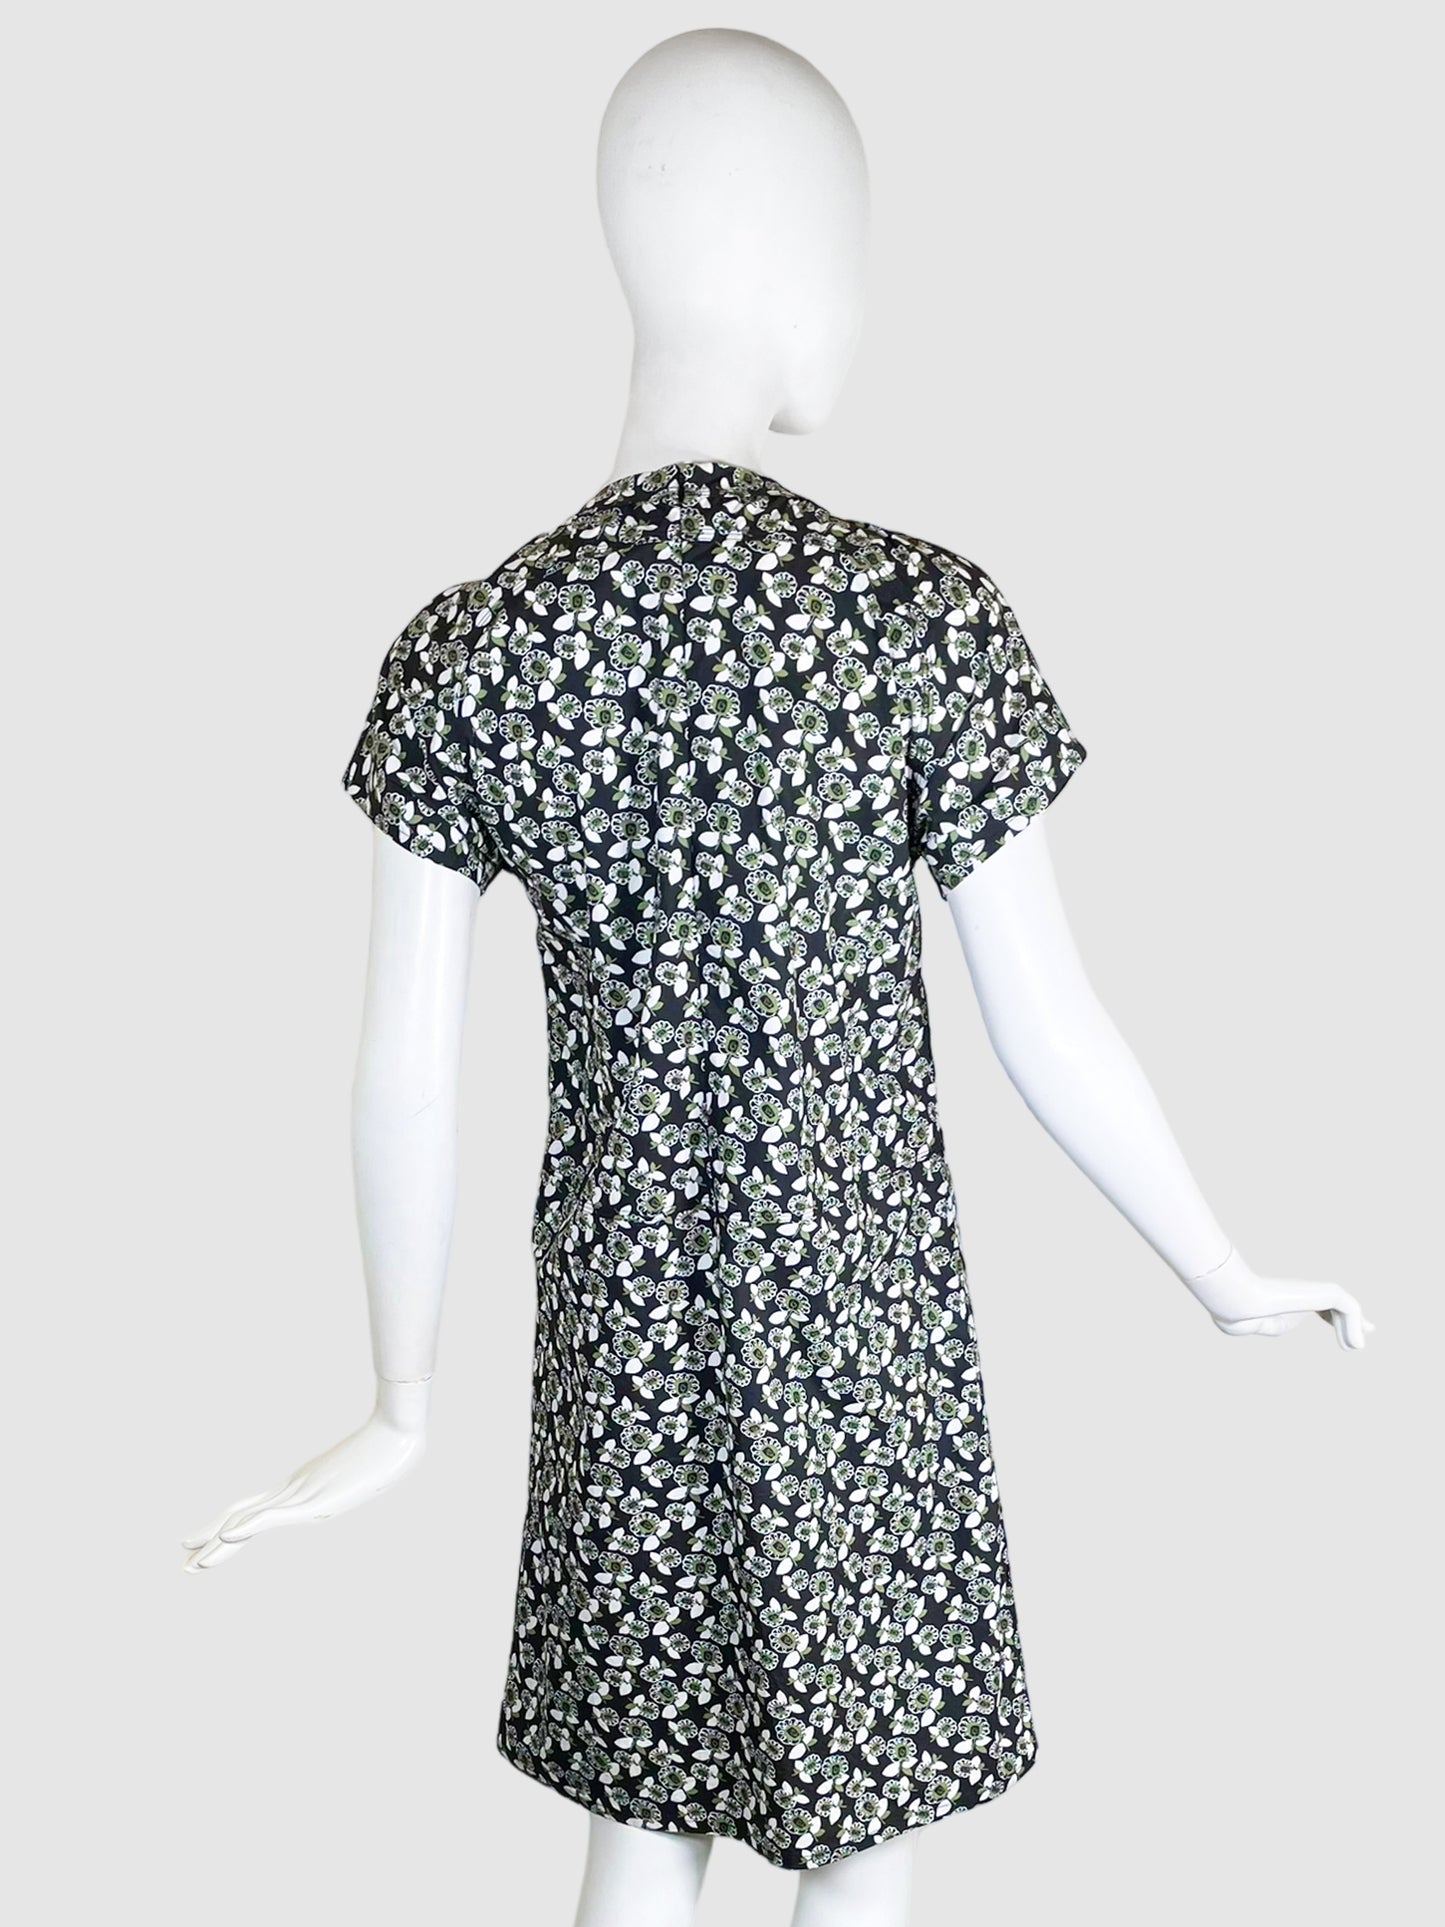 Marni Floral Print Short-Sleeve Dress - Size 38